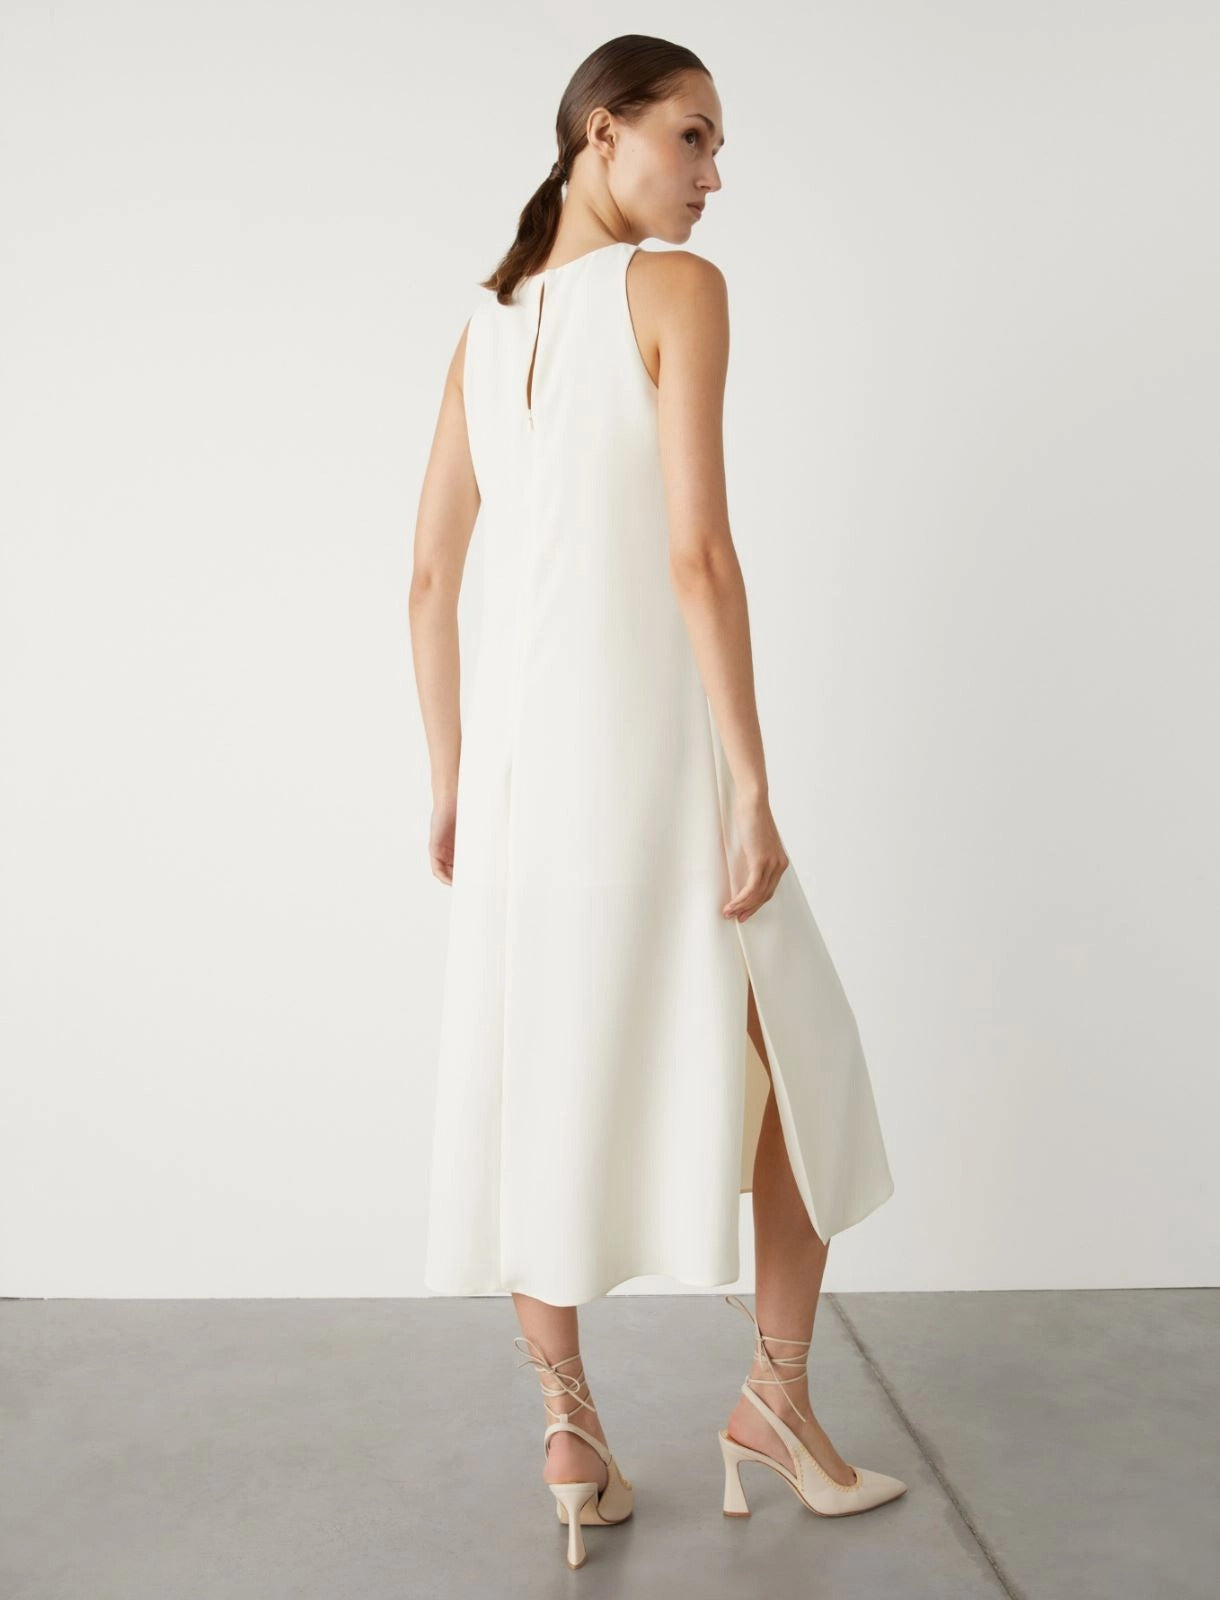 wool white crepe dress